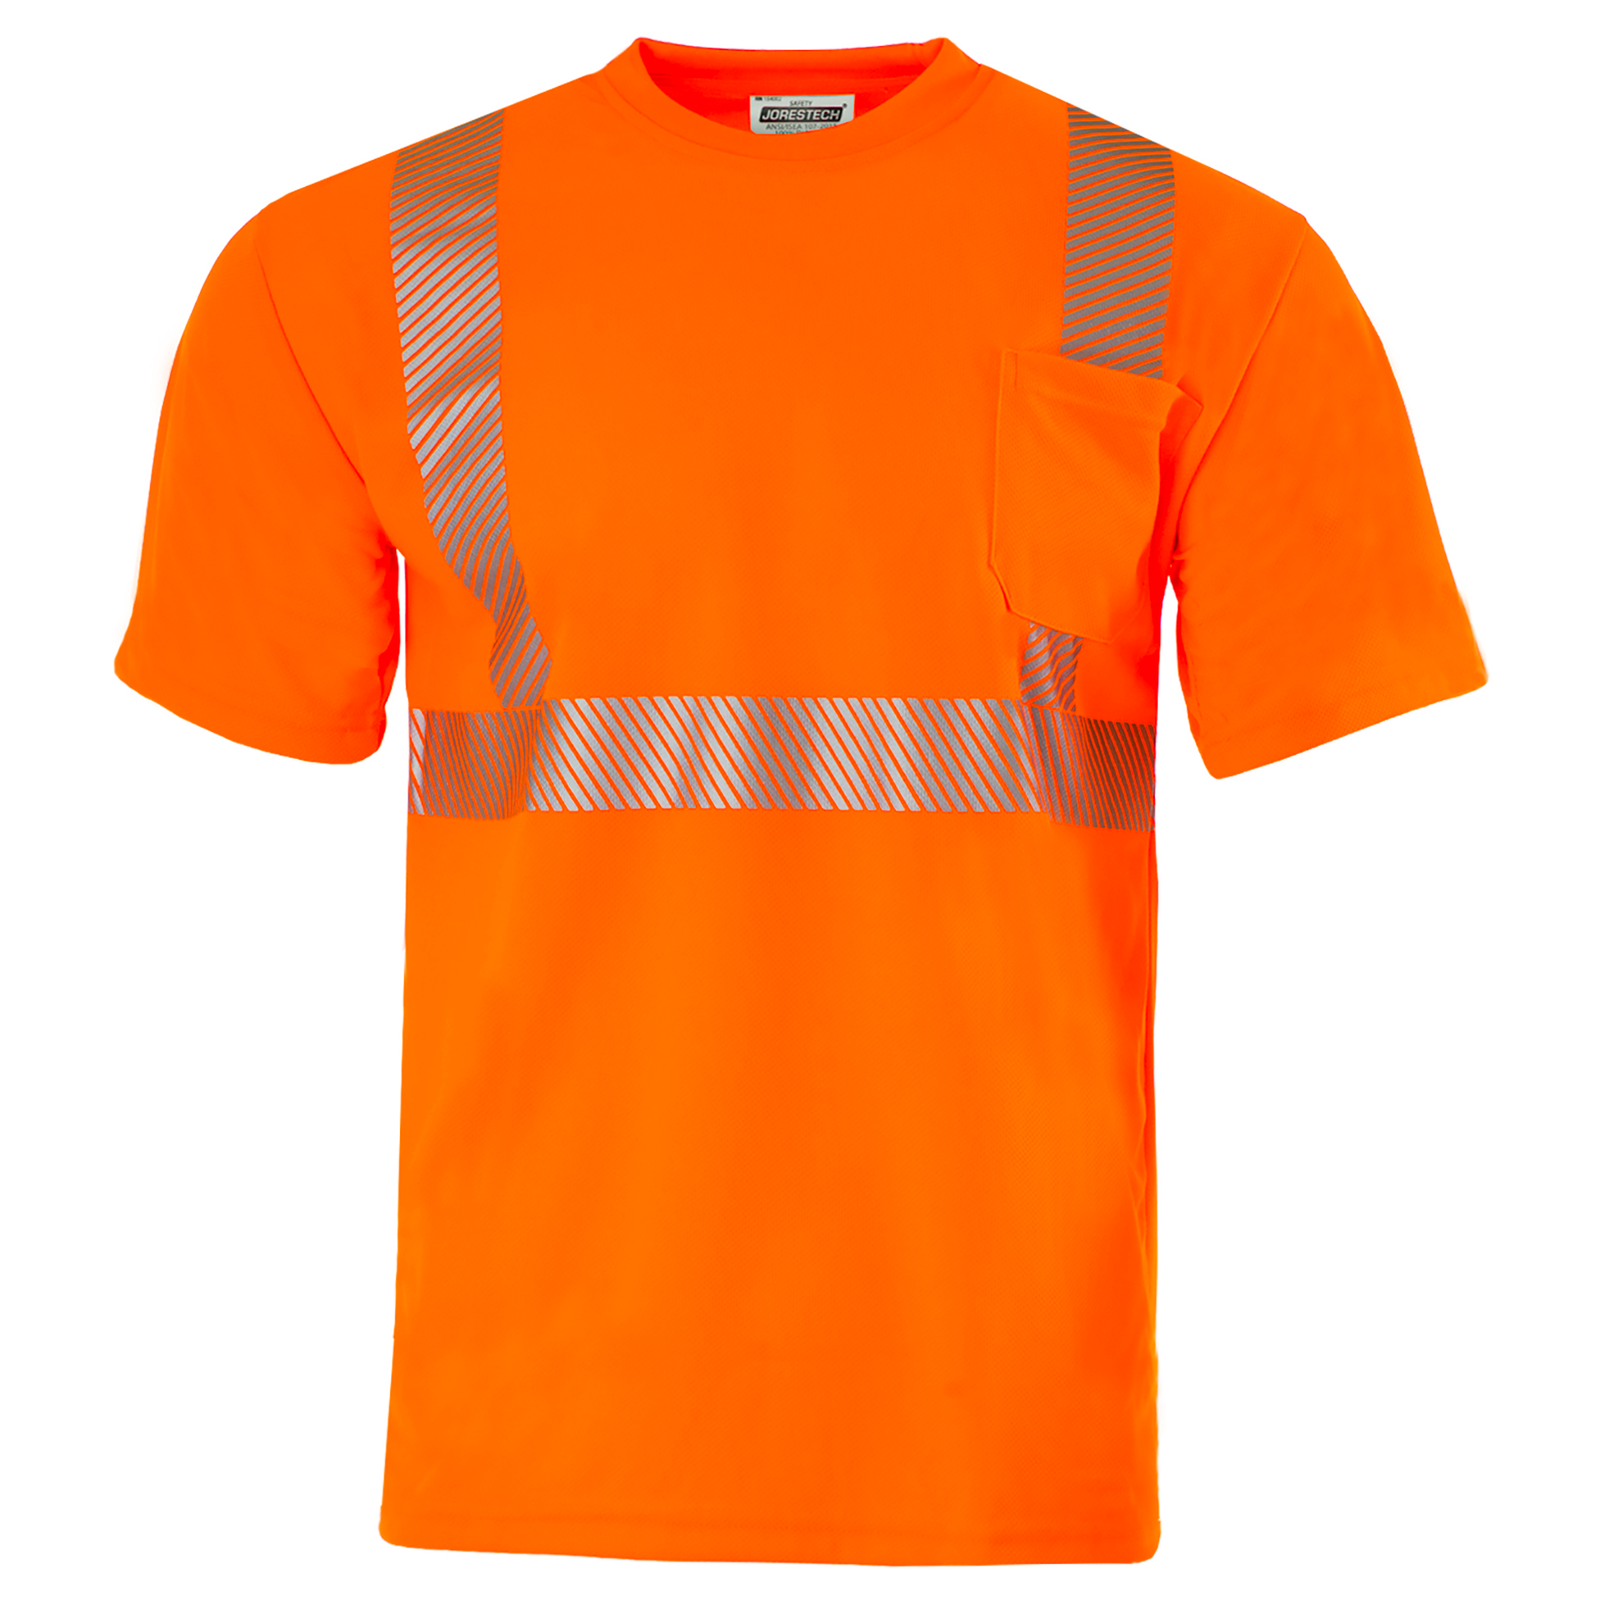 Front view of the JORESTECH Hi-Vis Orange heat transfer reflective safety pocket shirt